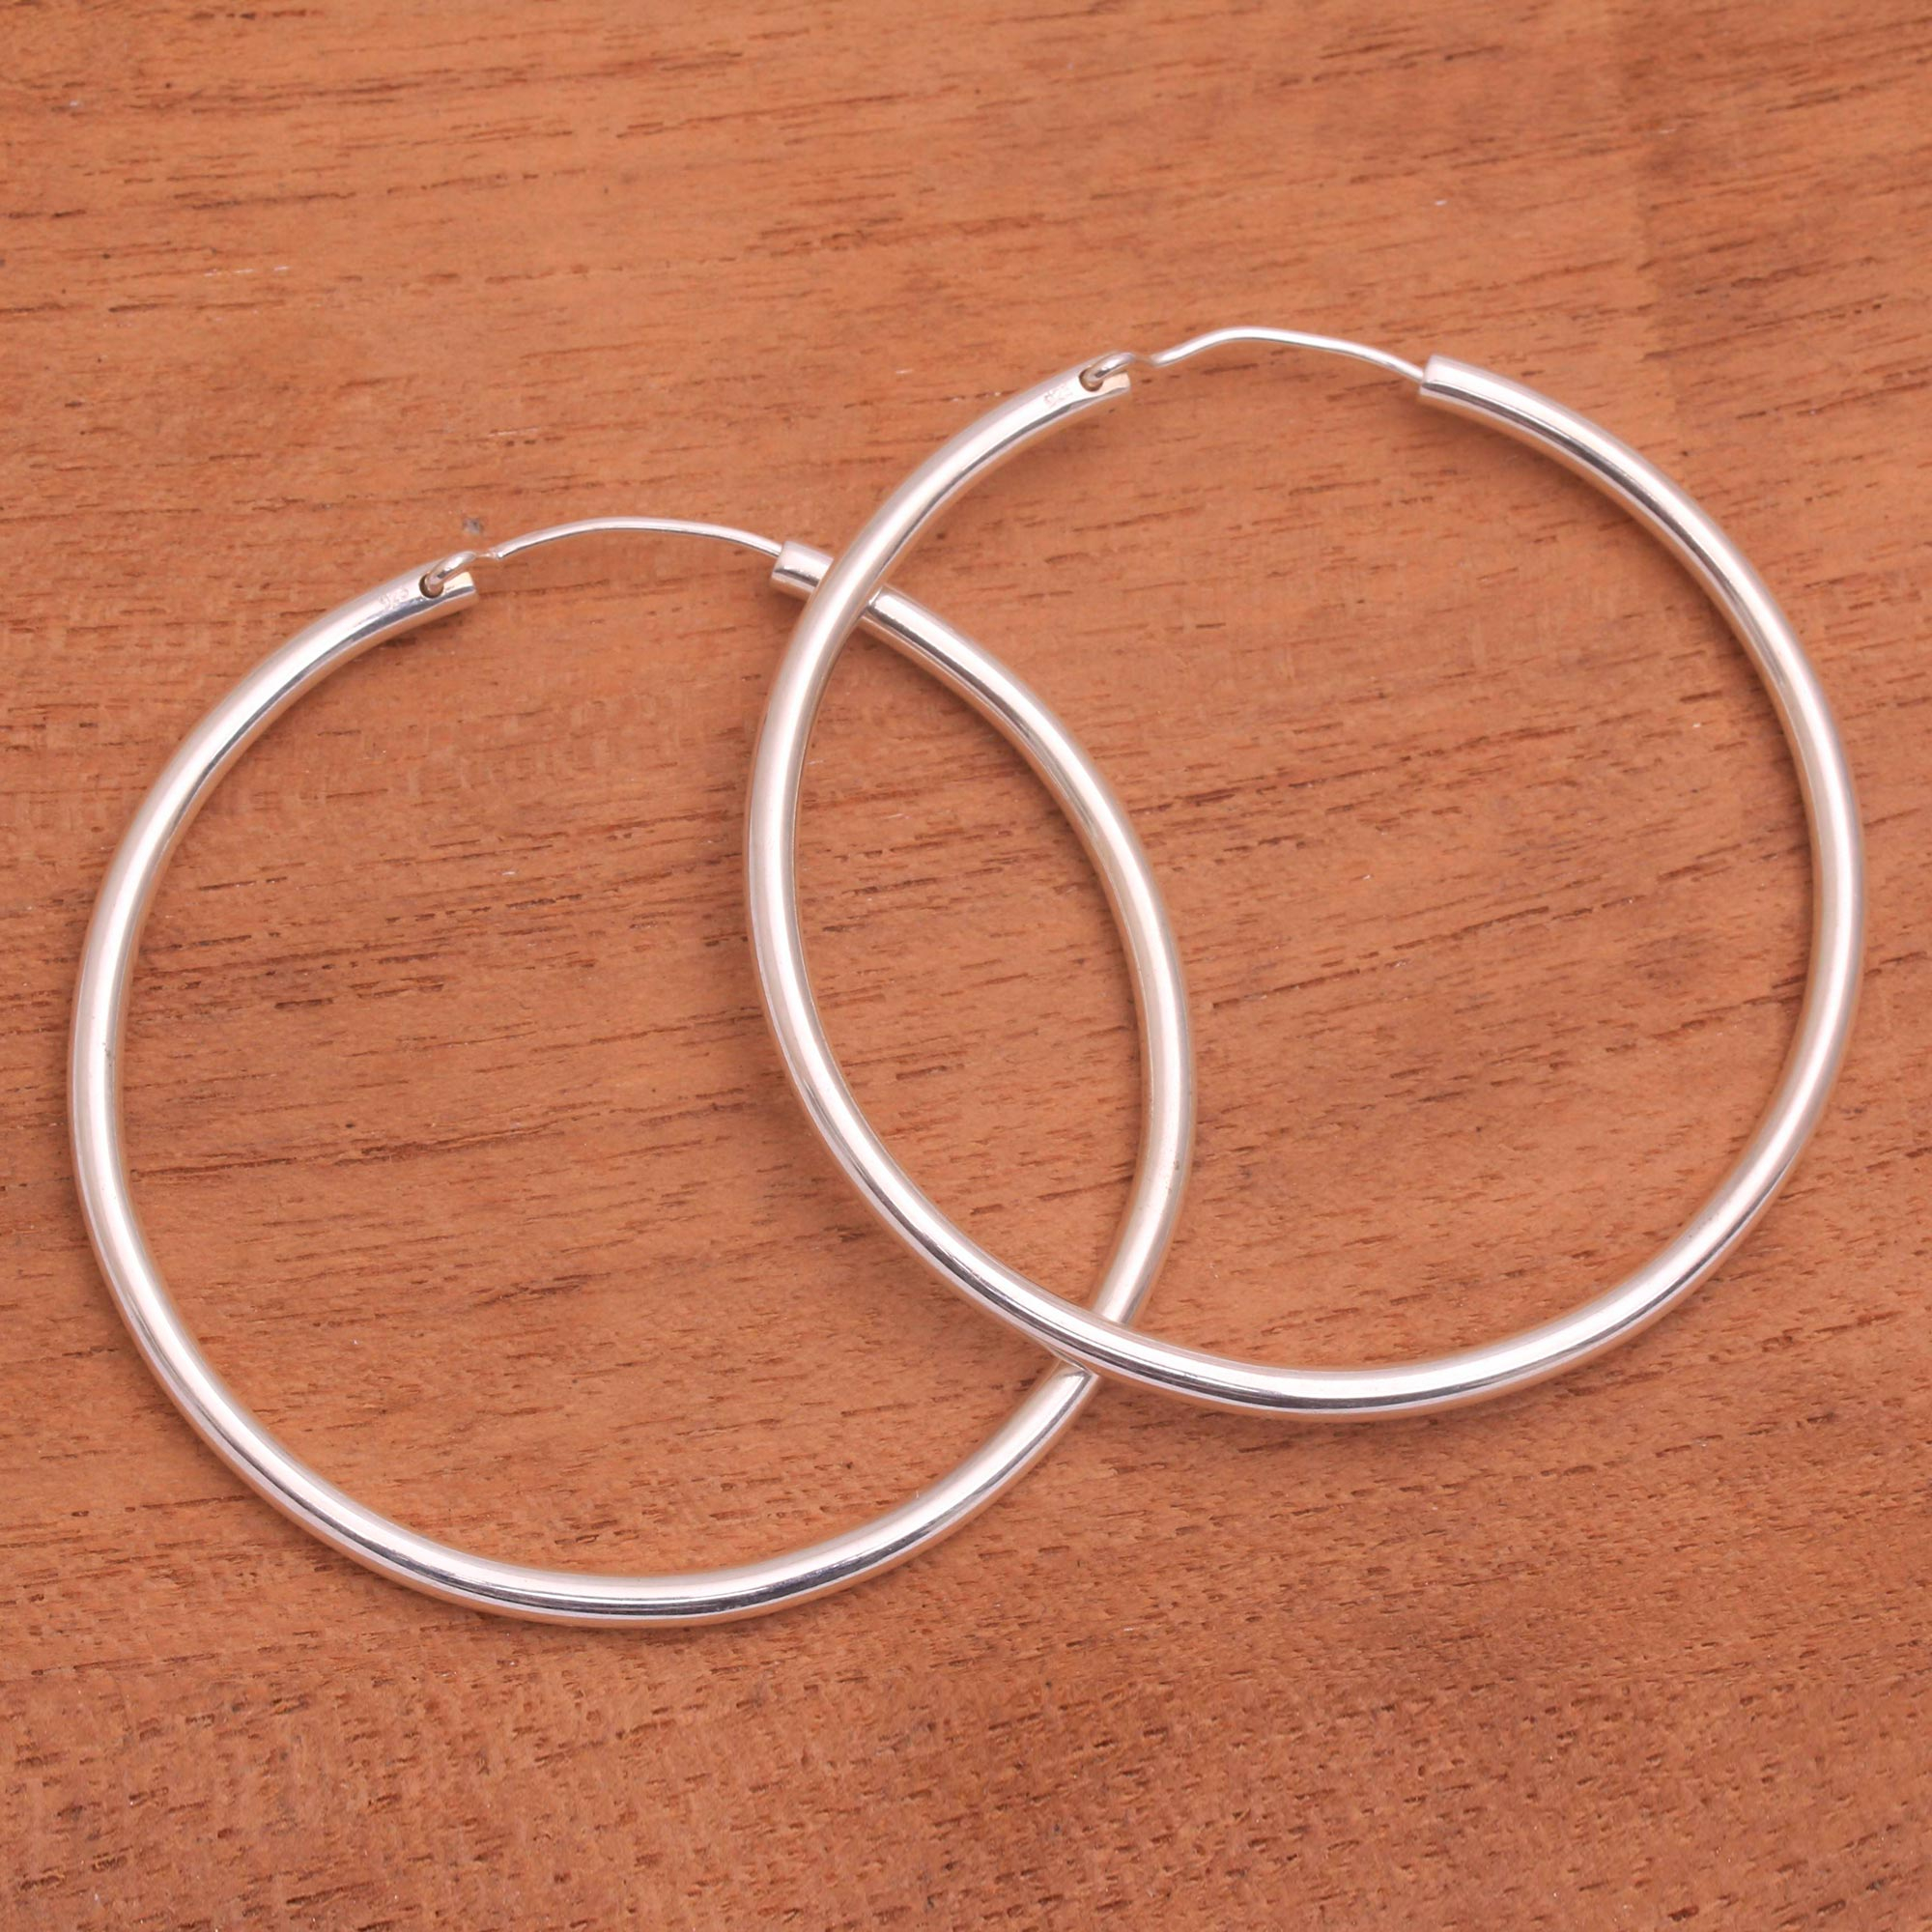 Simple Sterling Silver Hoop Earrings from Bali - Simple Thought